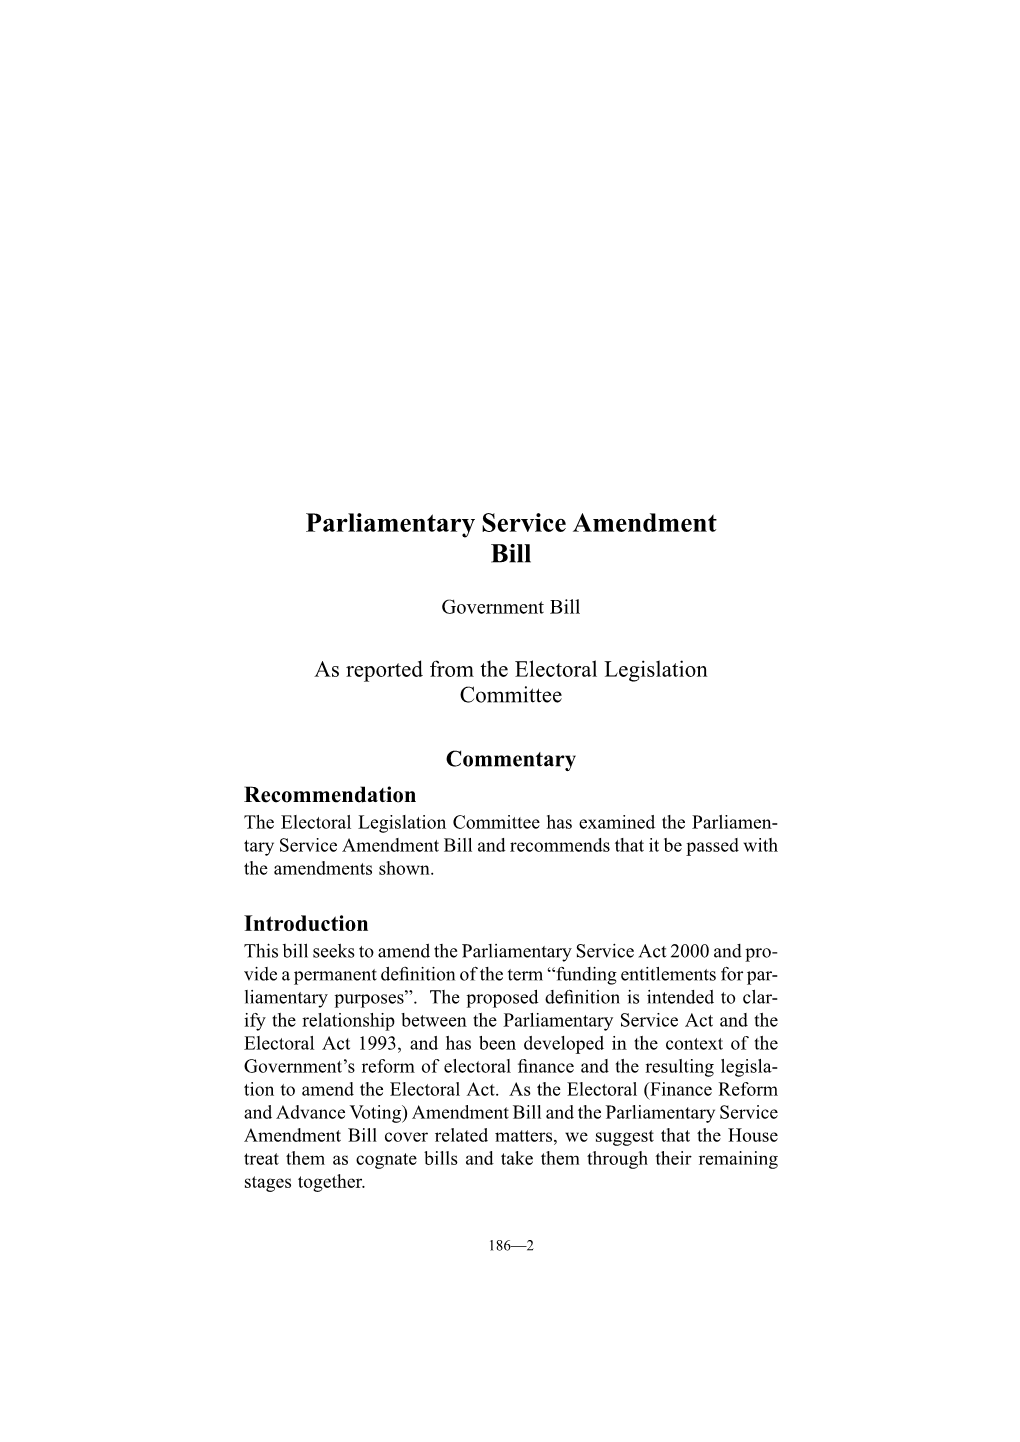 Parliamentary Service Amendment Bill